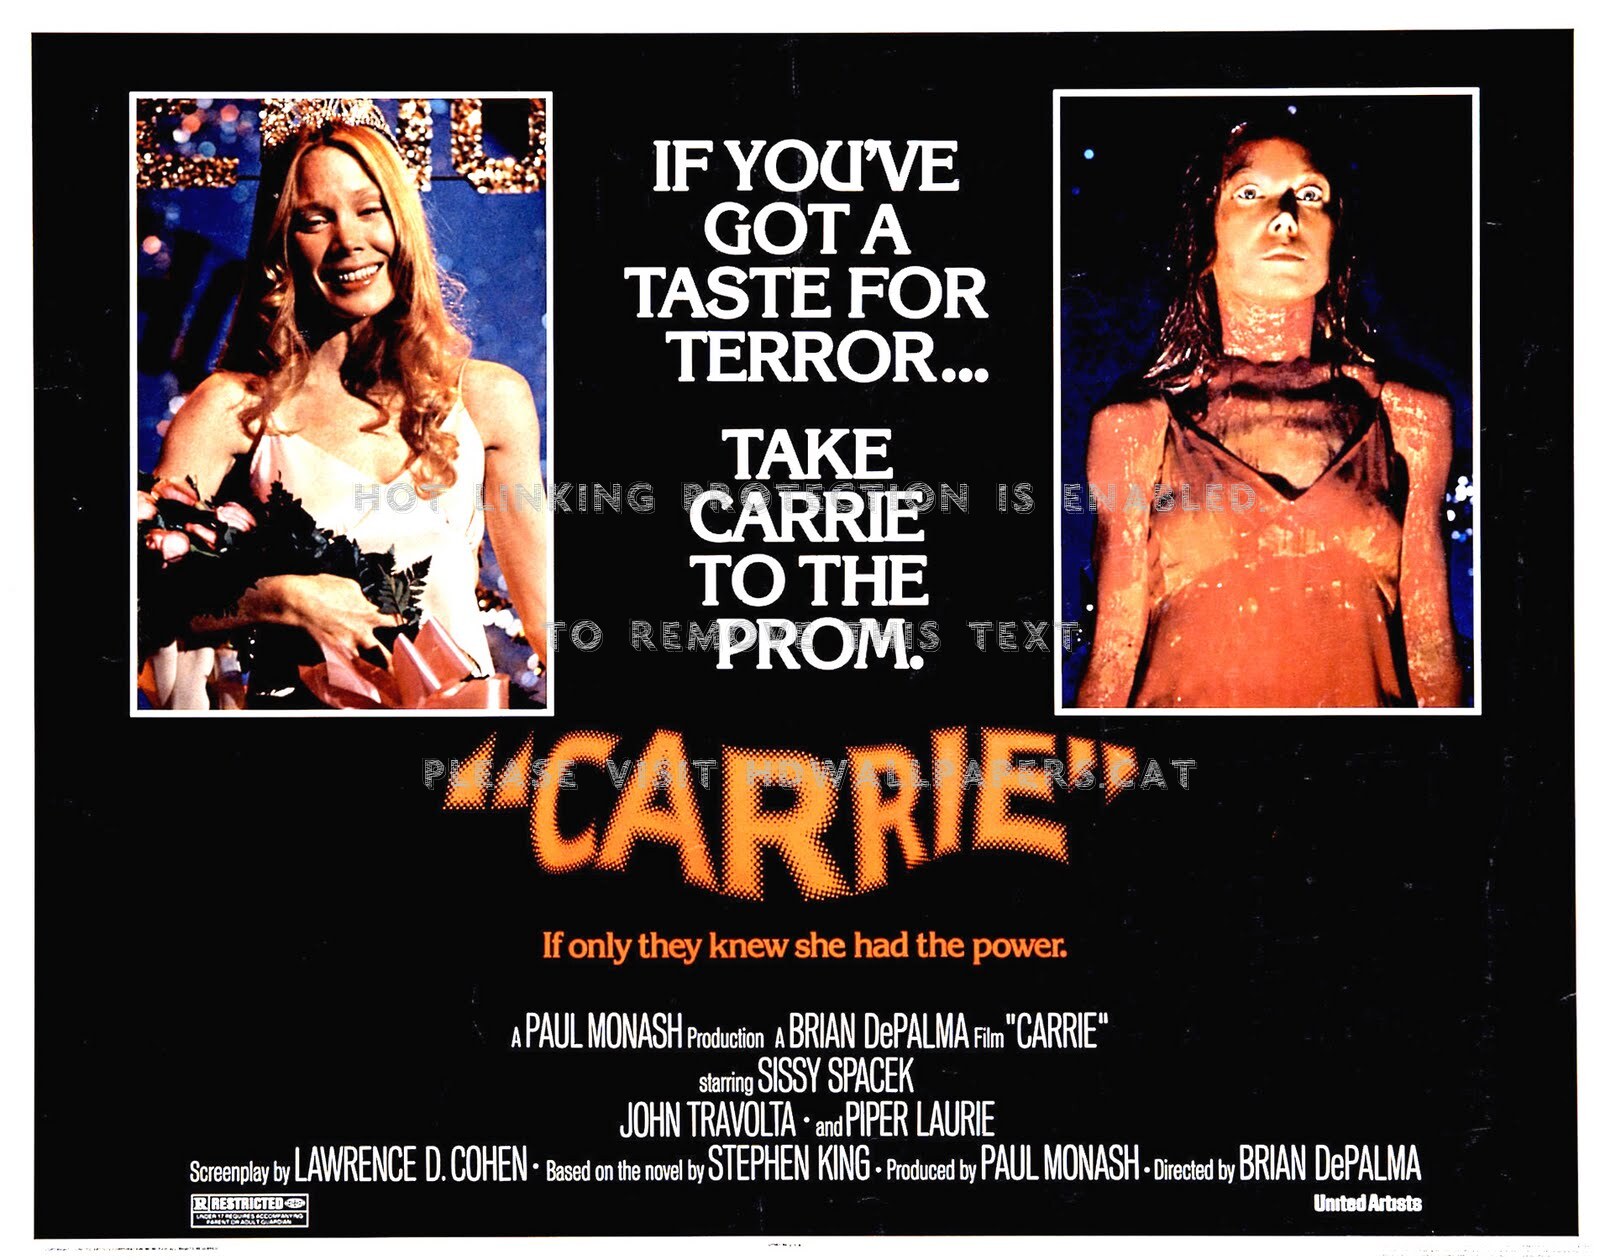 Carrie John Travolta Stephen King Sissy - Carrie Movie Poster 1976 - HD Wallpaper 